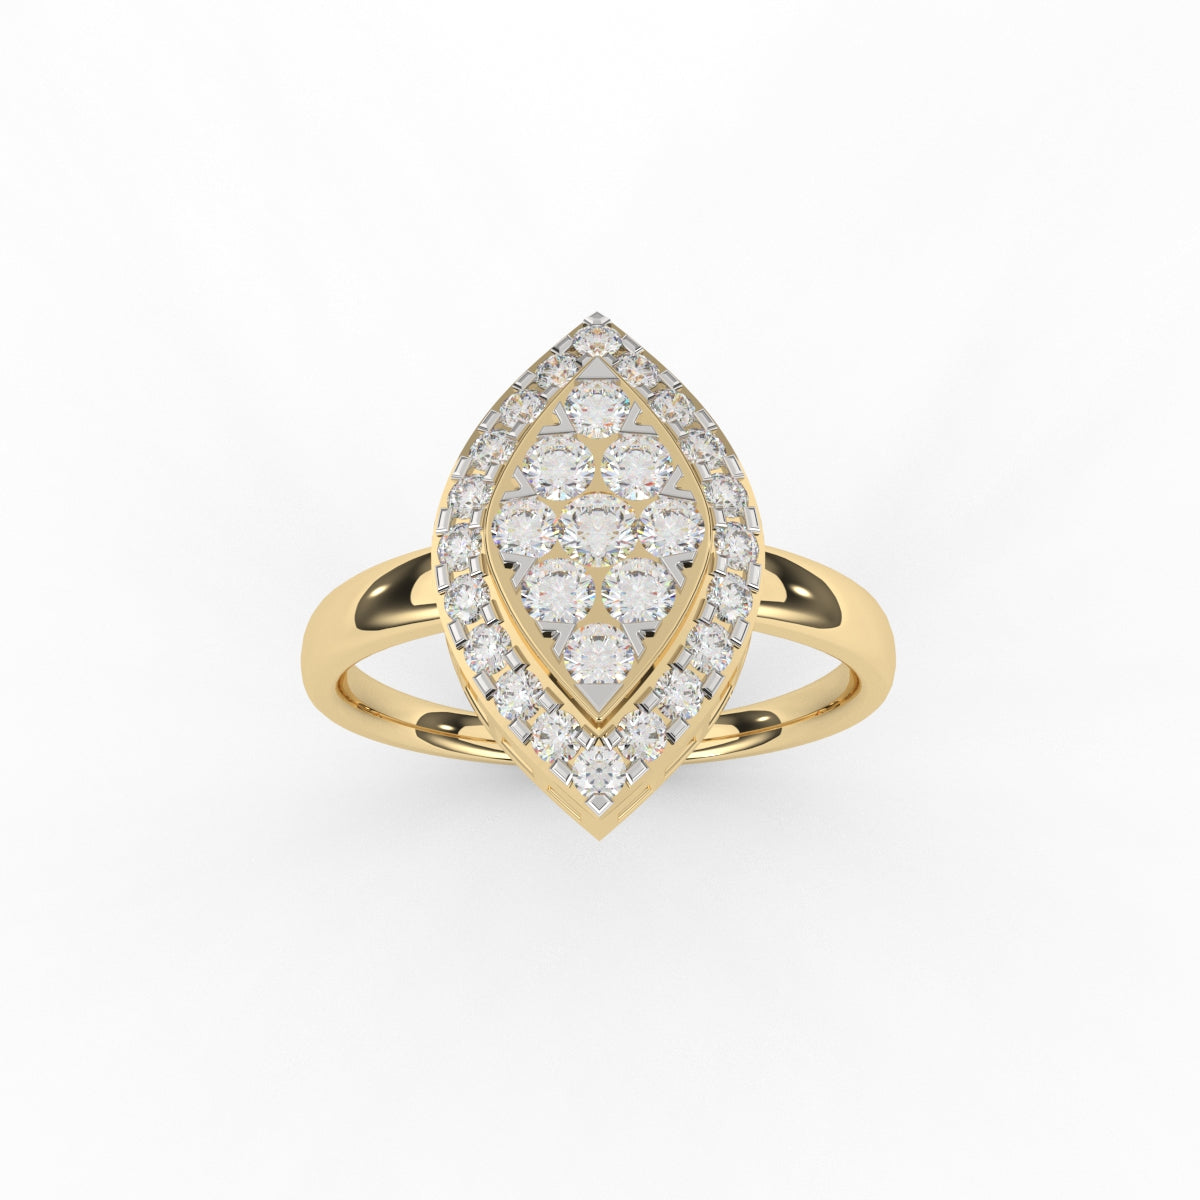 Syaraon diamond ring